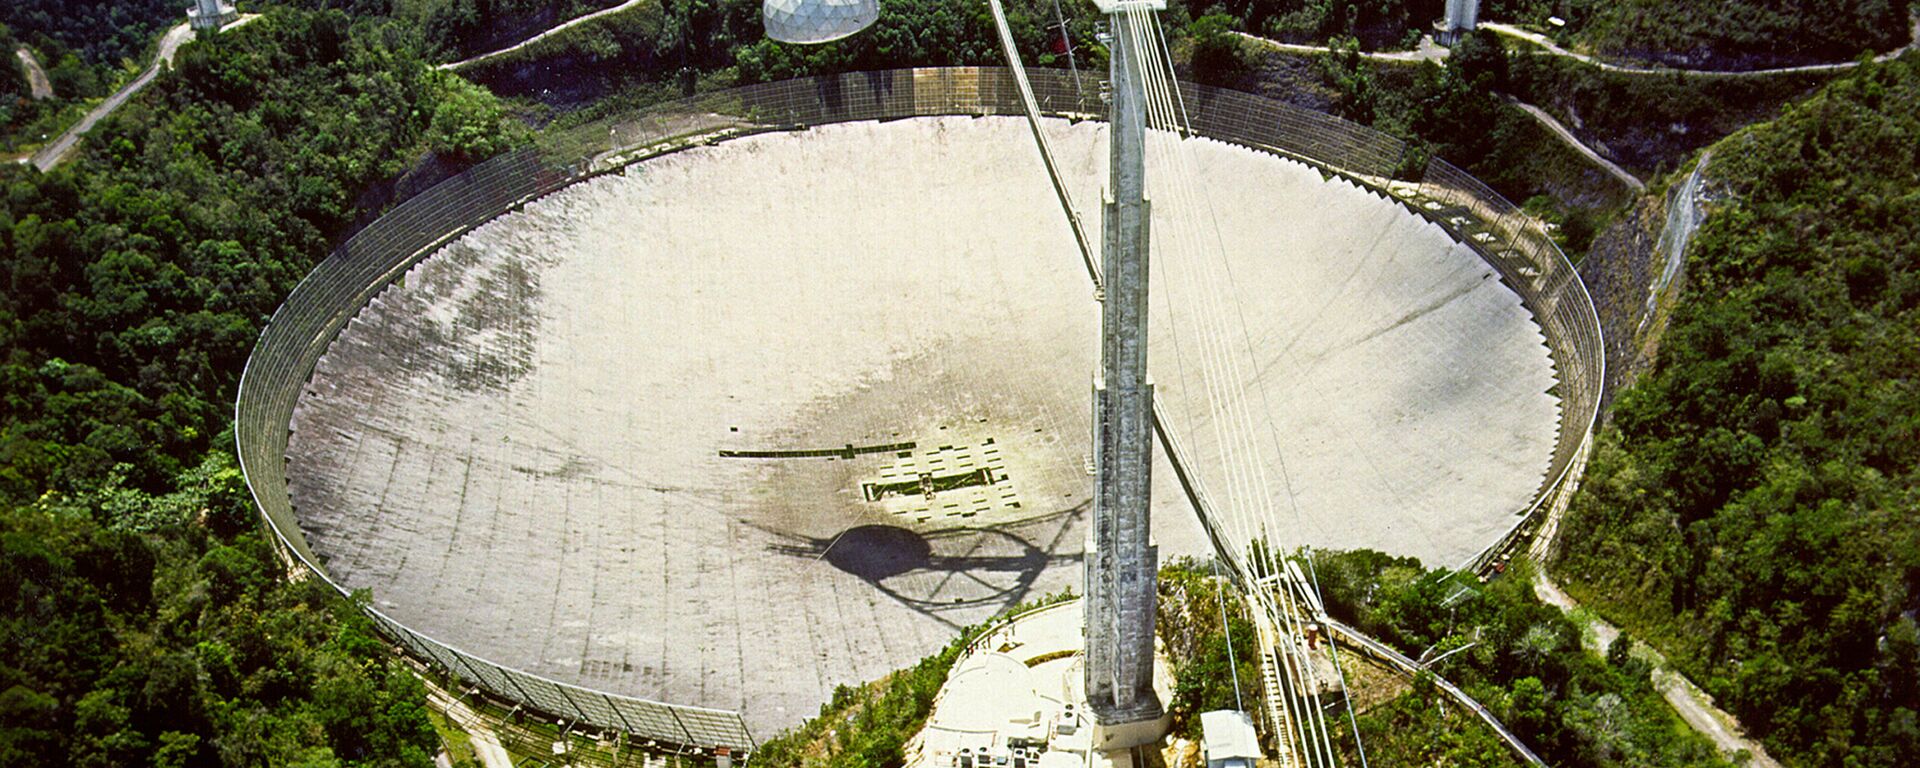 Radiotelescópio de Arecibo em Puerto Rico - Sputnik Brasil, 1920, 04.12.2020